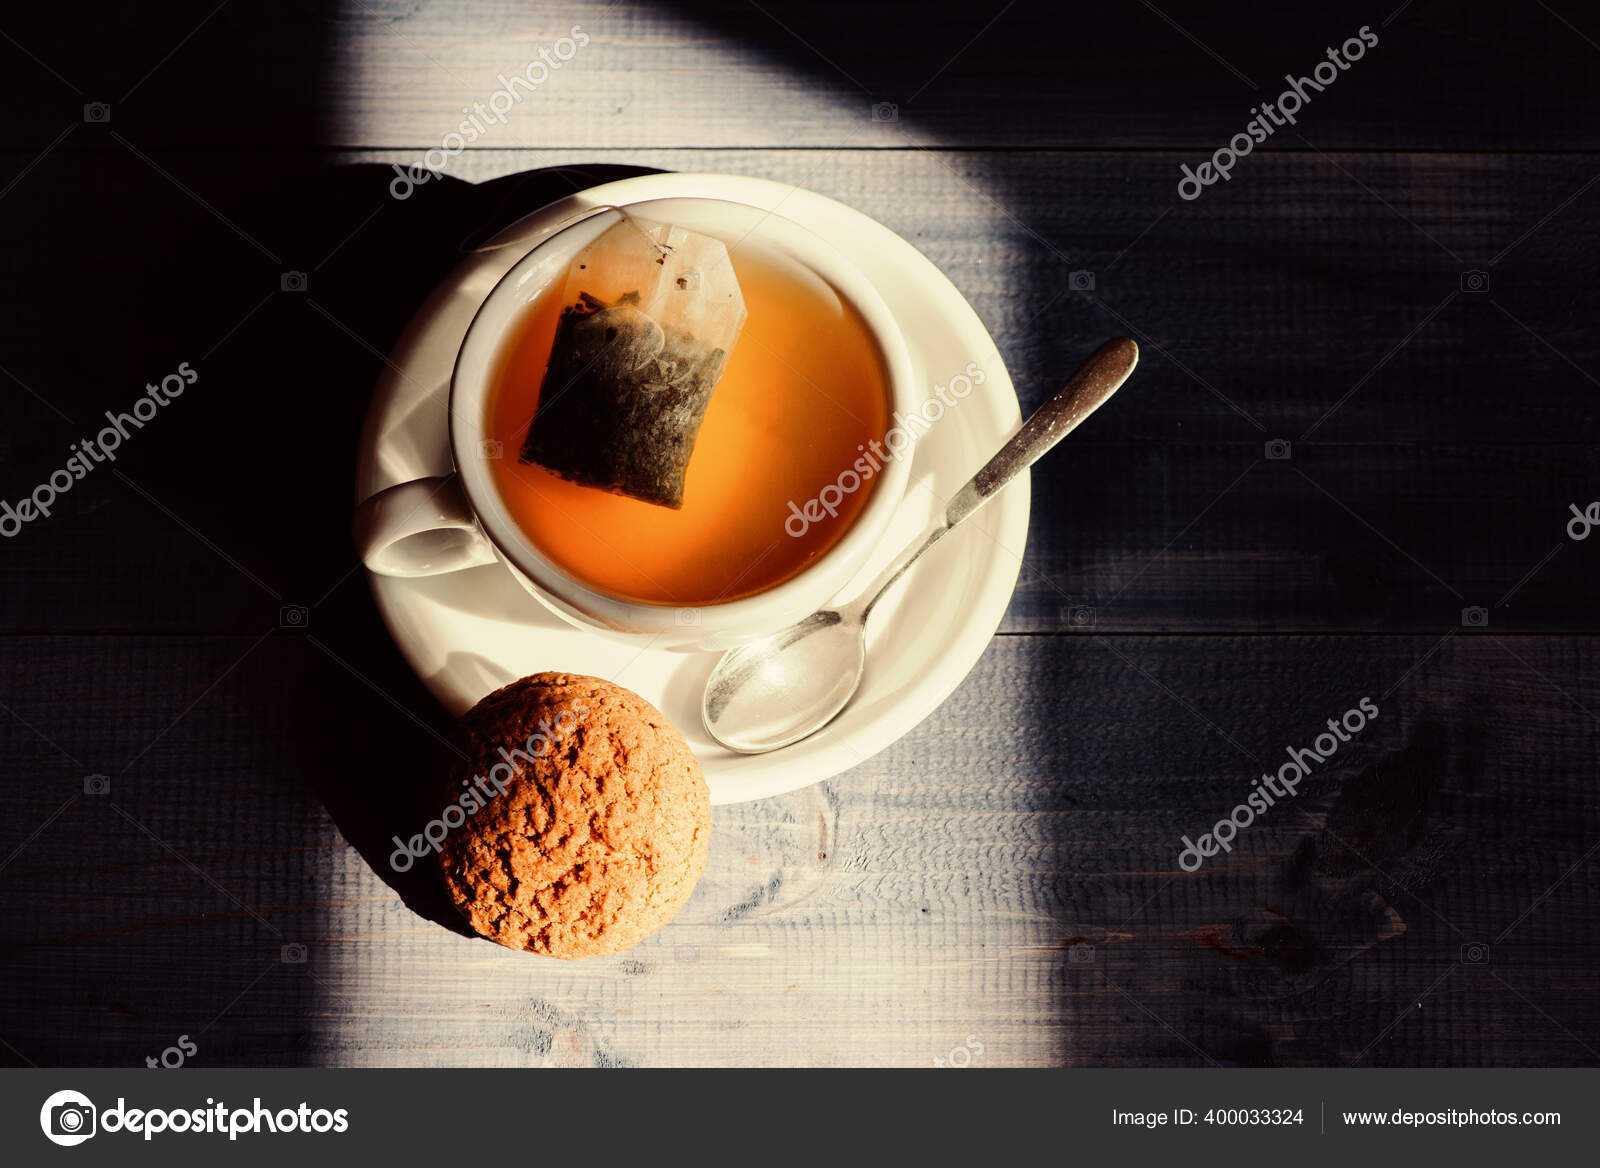 https://st4.depositphotos.com/2760050/40003/i/1600/depositphotos_400033324-stock-photo-process-tea-brewing-ceramic-mug.jpg